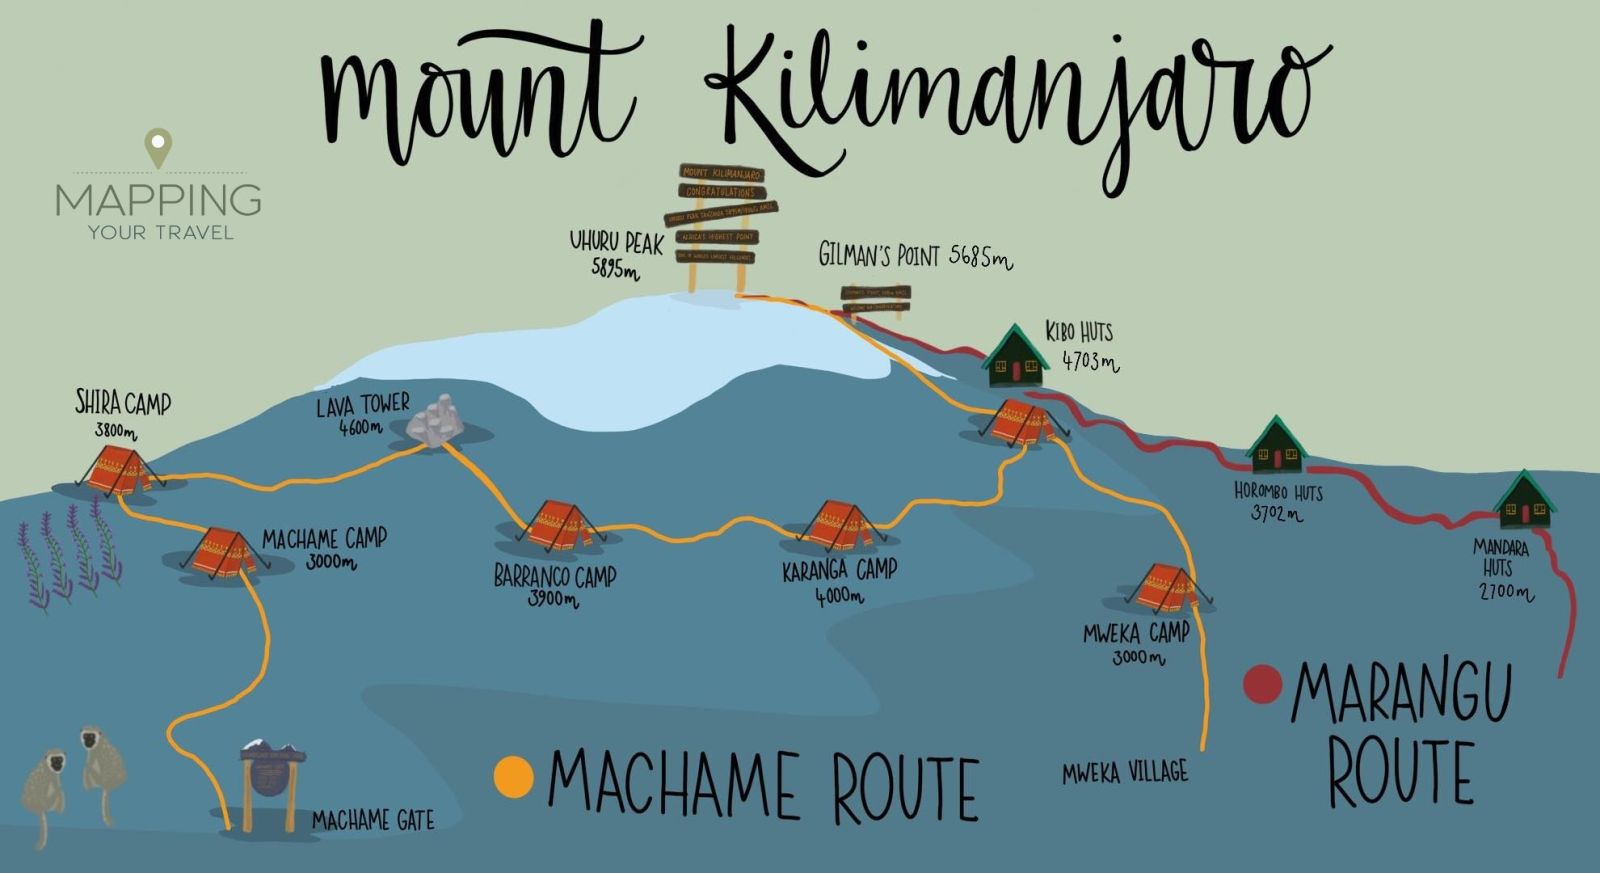 Mount Kilimanjaro Trekking Routes, Machame, Marangu